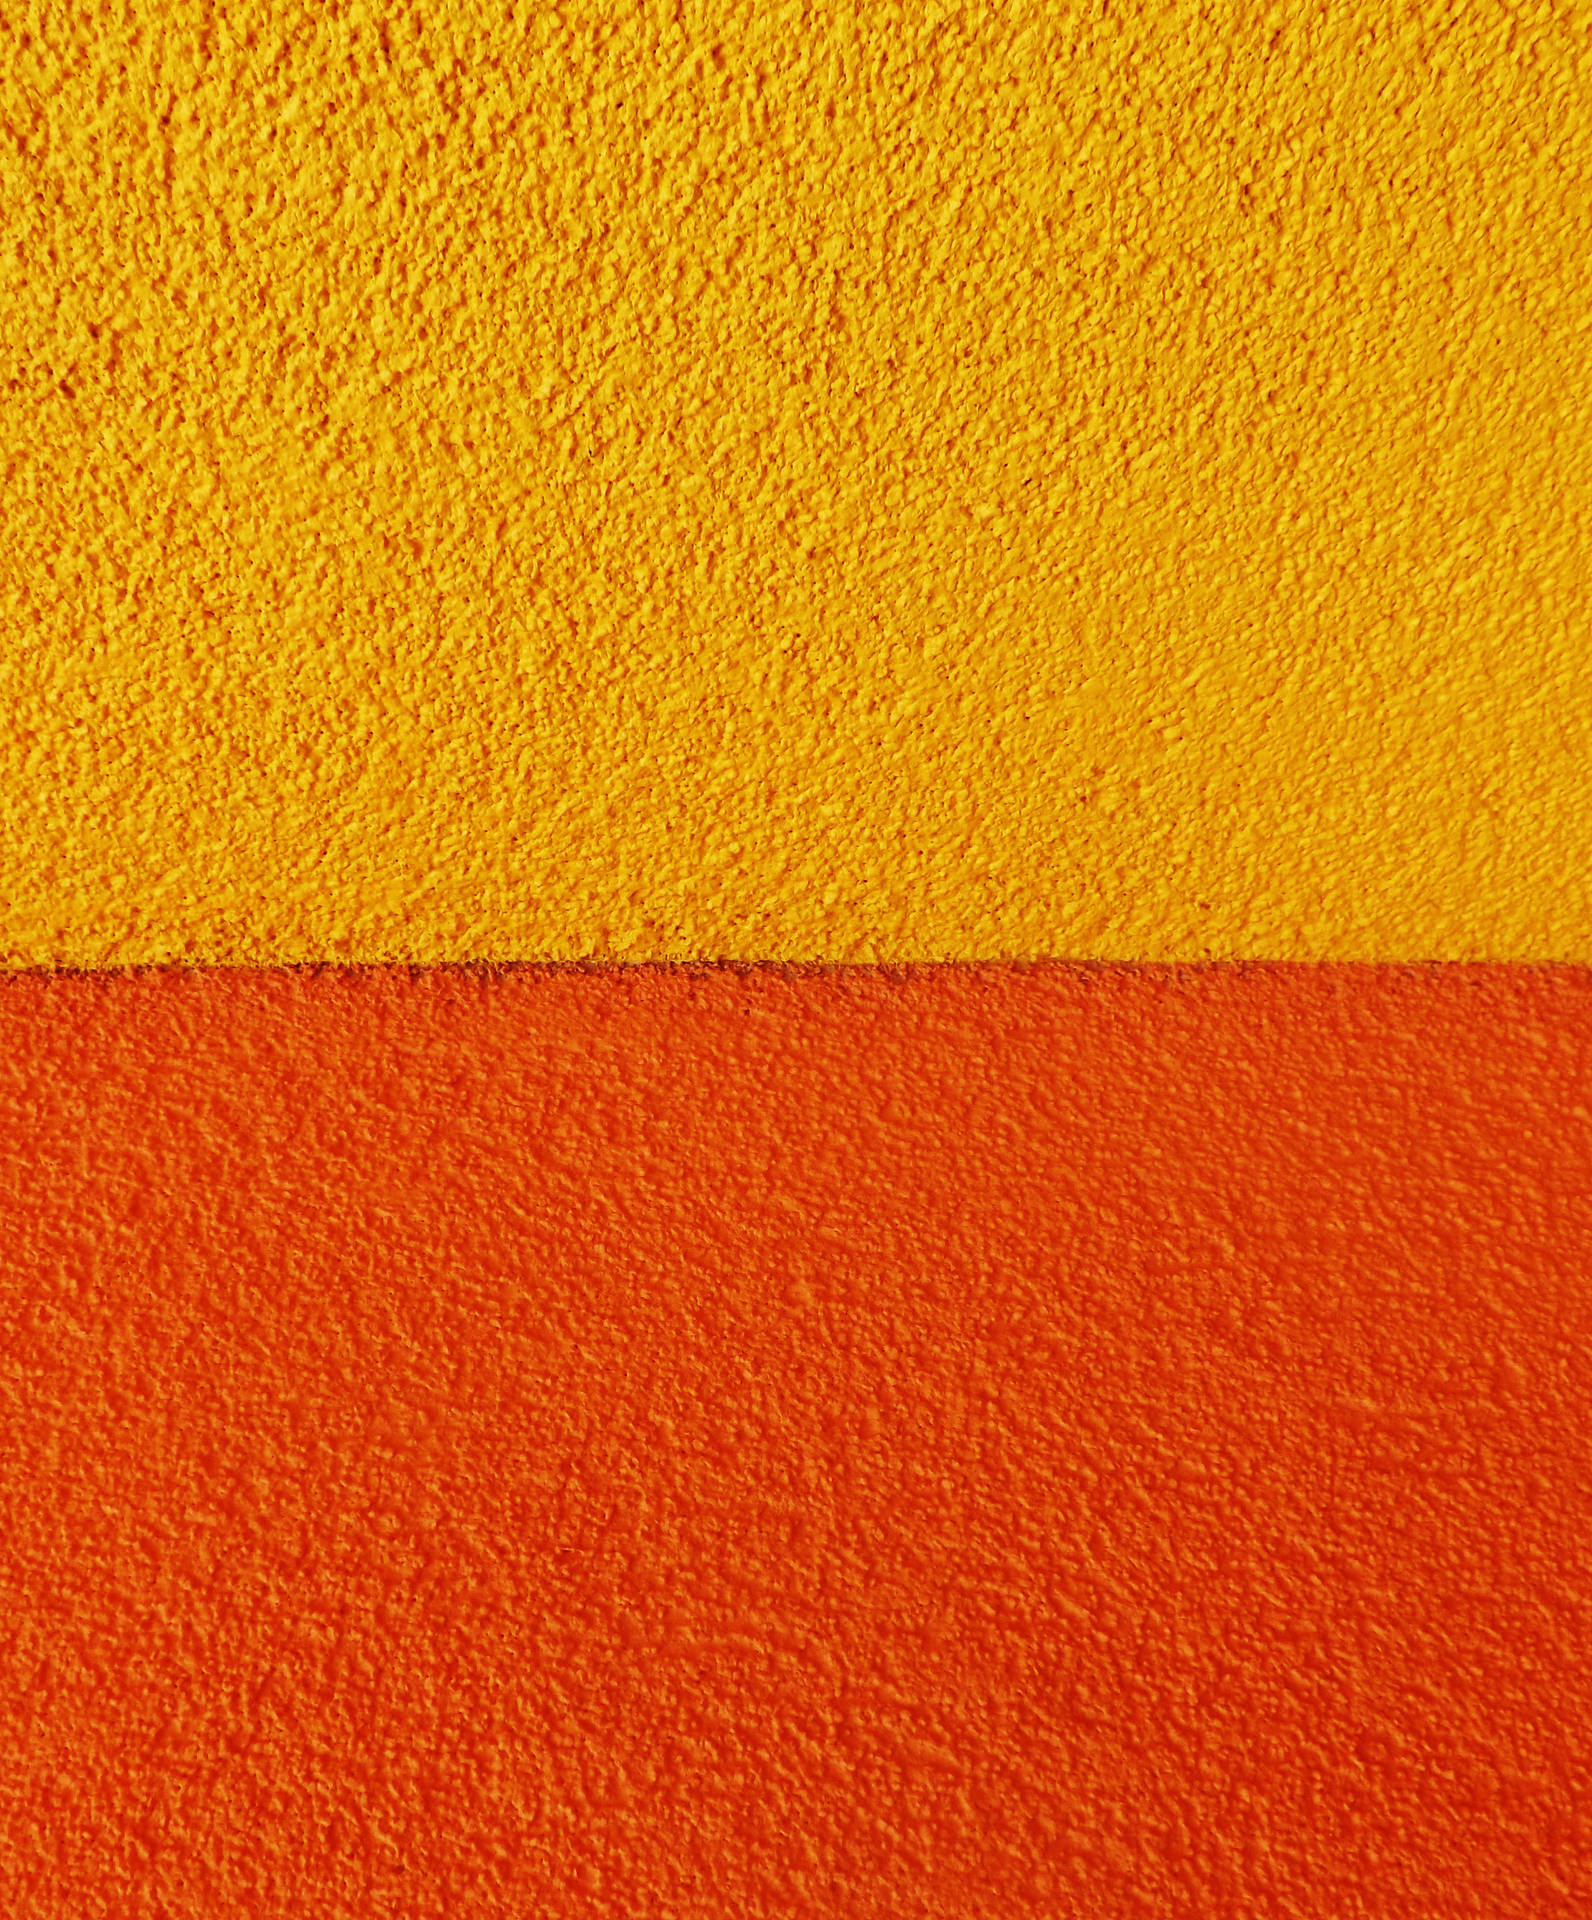 Concretonaranja Y Amarillo Texturizado. Fondo de pantalla